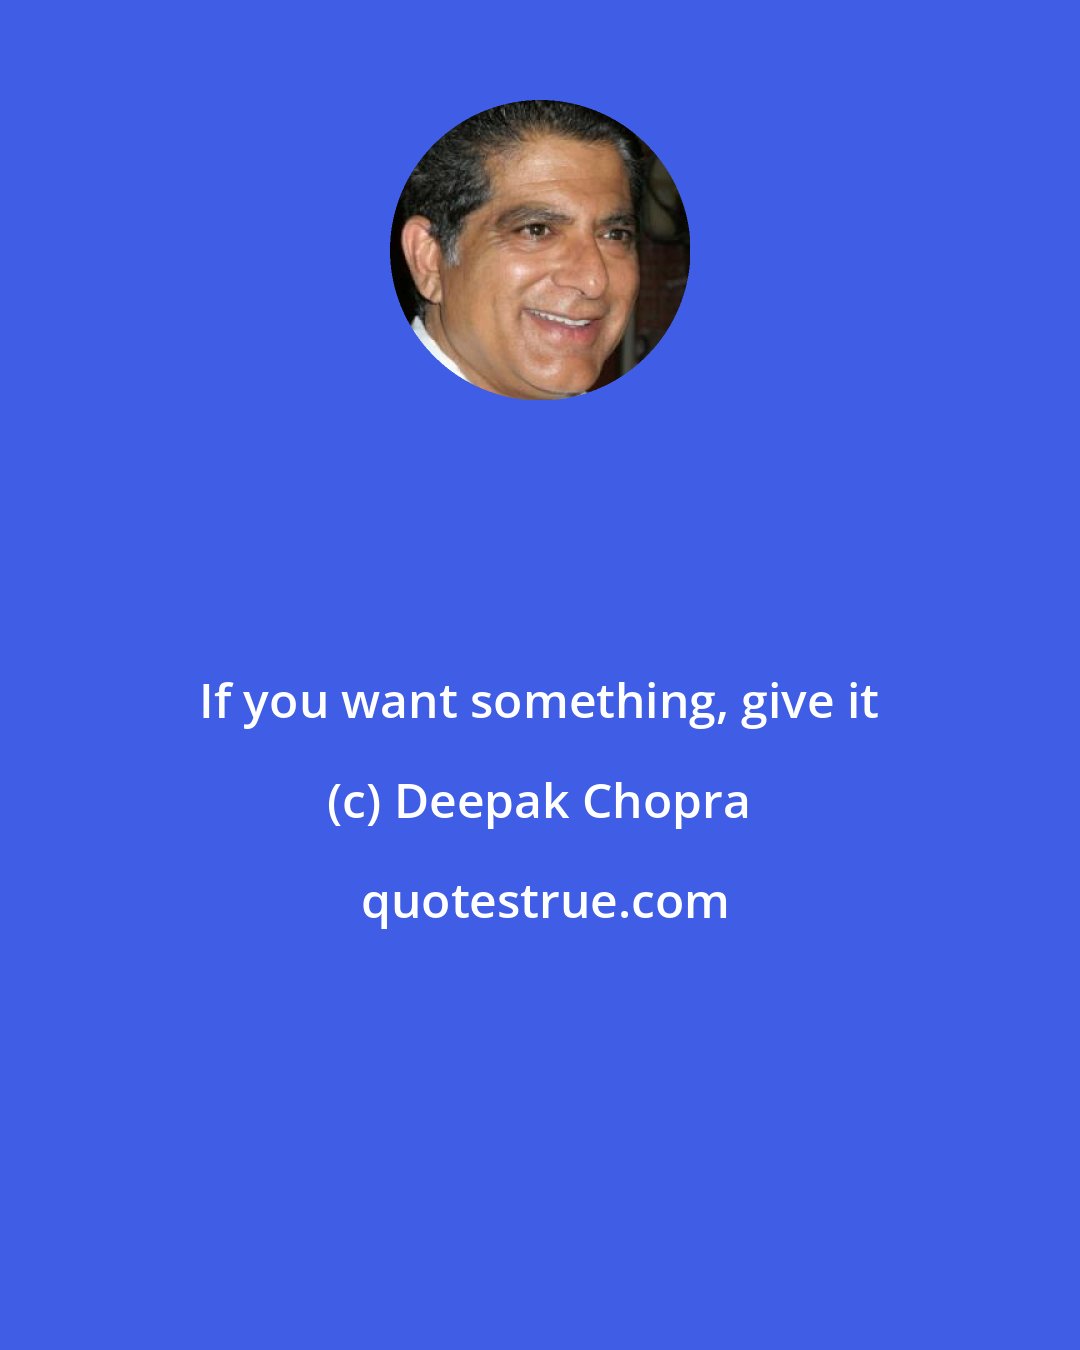 Deepak Chopra: If you want something, give it